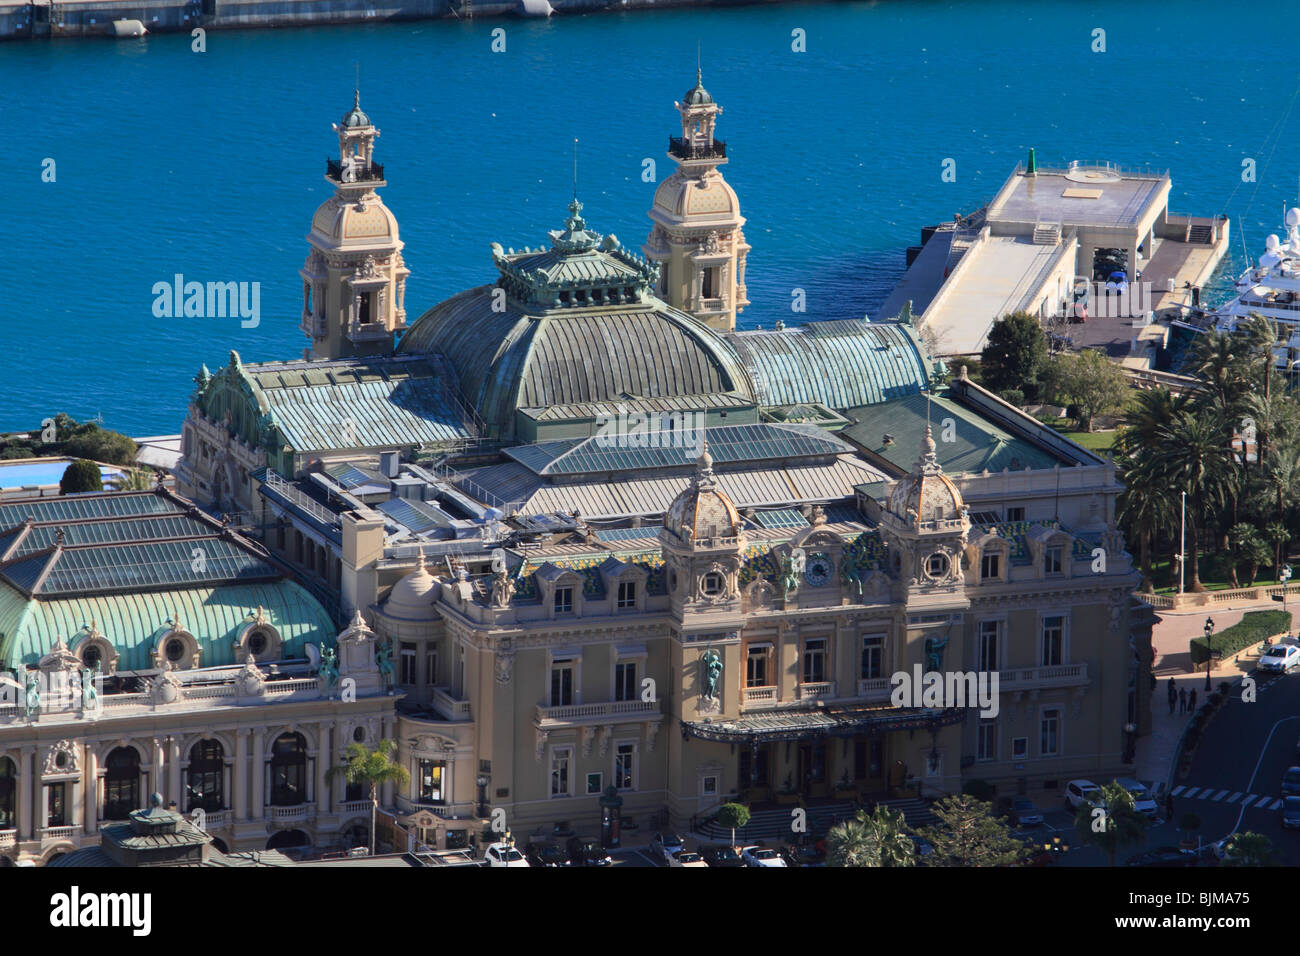 Monte-Carlo Casino and Opera House, architect Charles Garnier, the Principality of Monaco, Cote d'Azur, Mediterranean, Europe Stock Photo